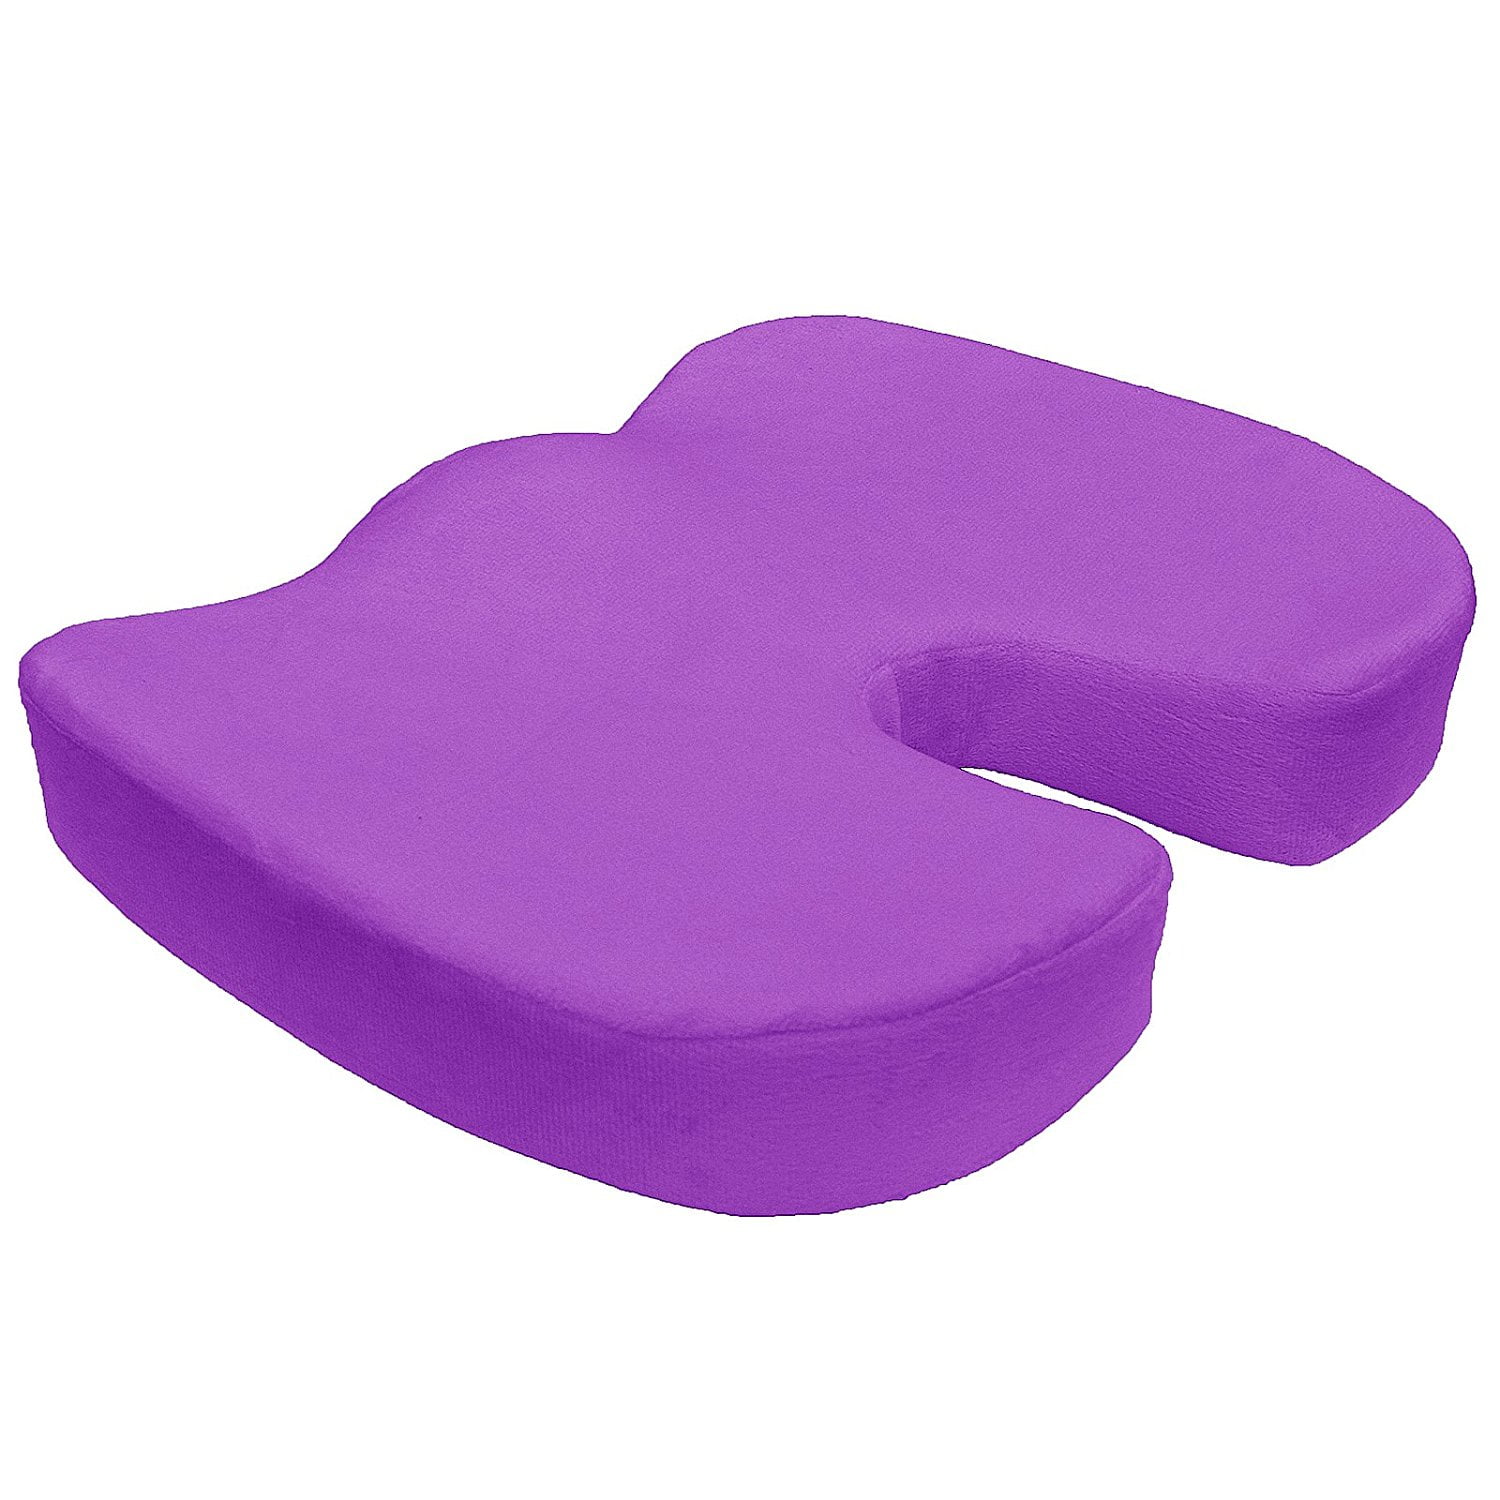 Soft Memory Foam Coccyx Seat Cushion Support Pillow Sciatica Pain